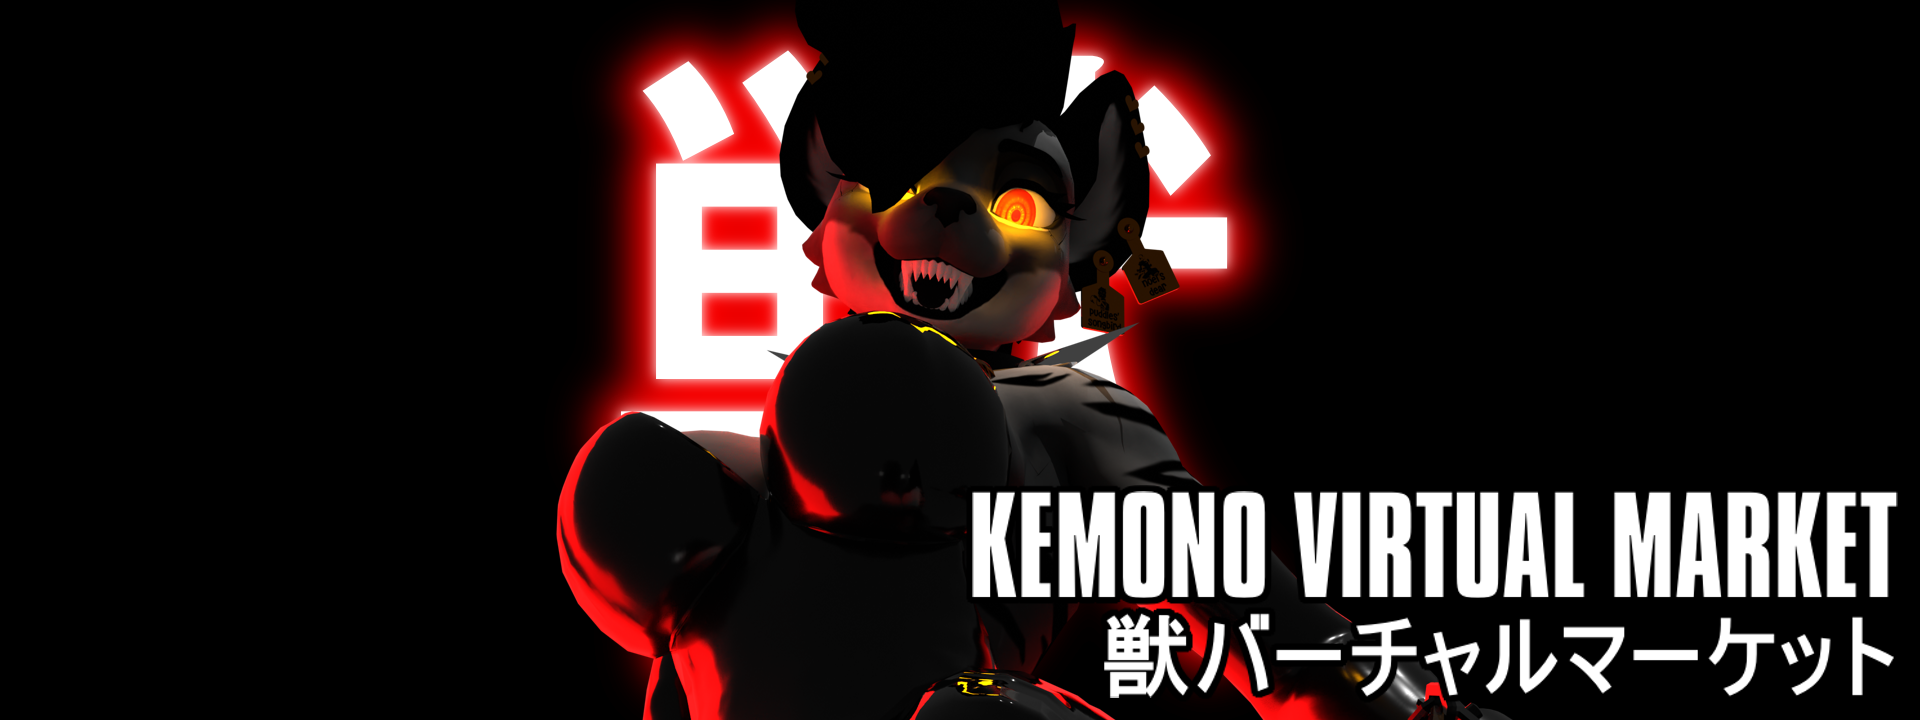 Kemono Virtual Market